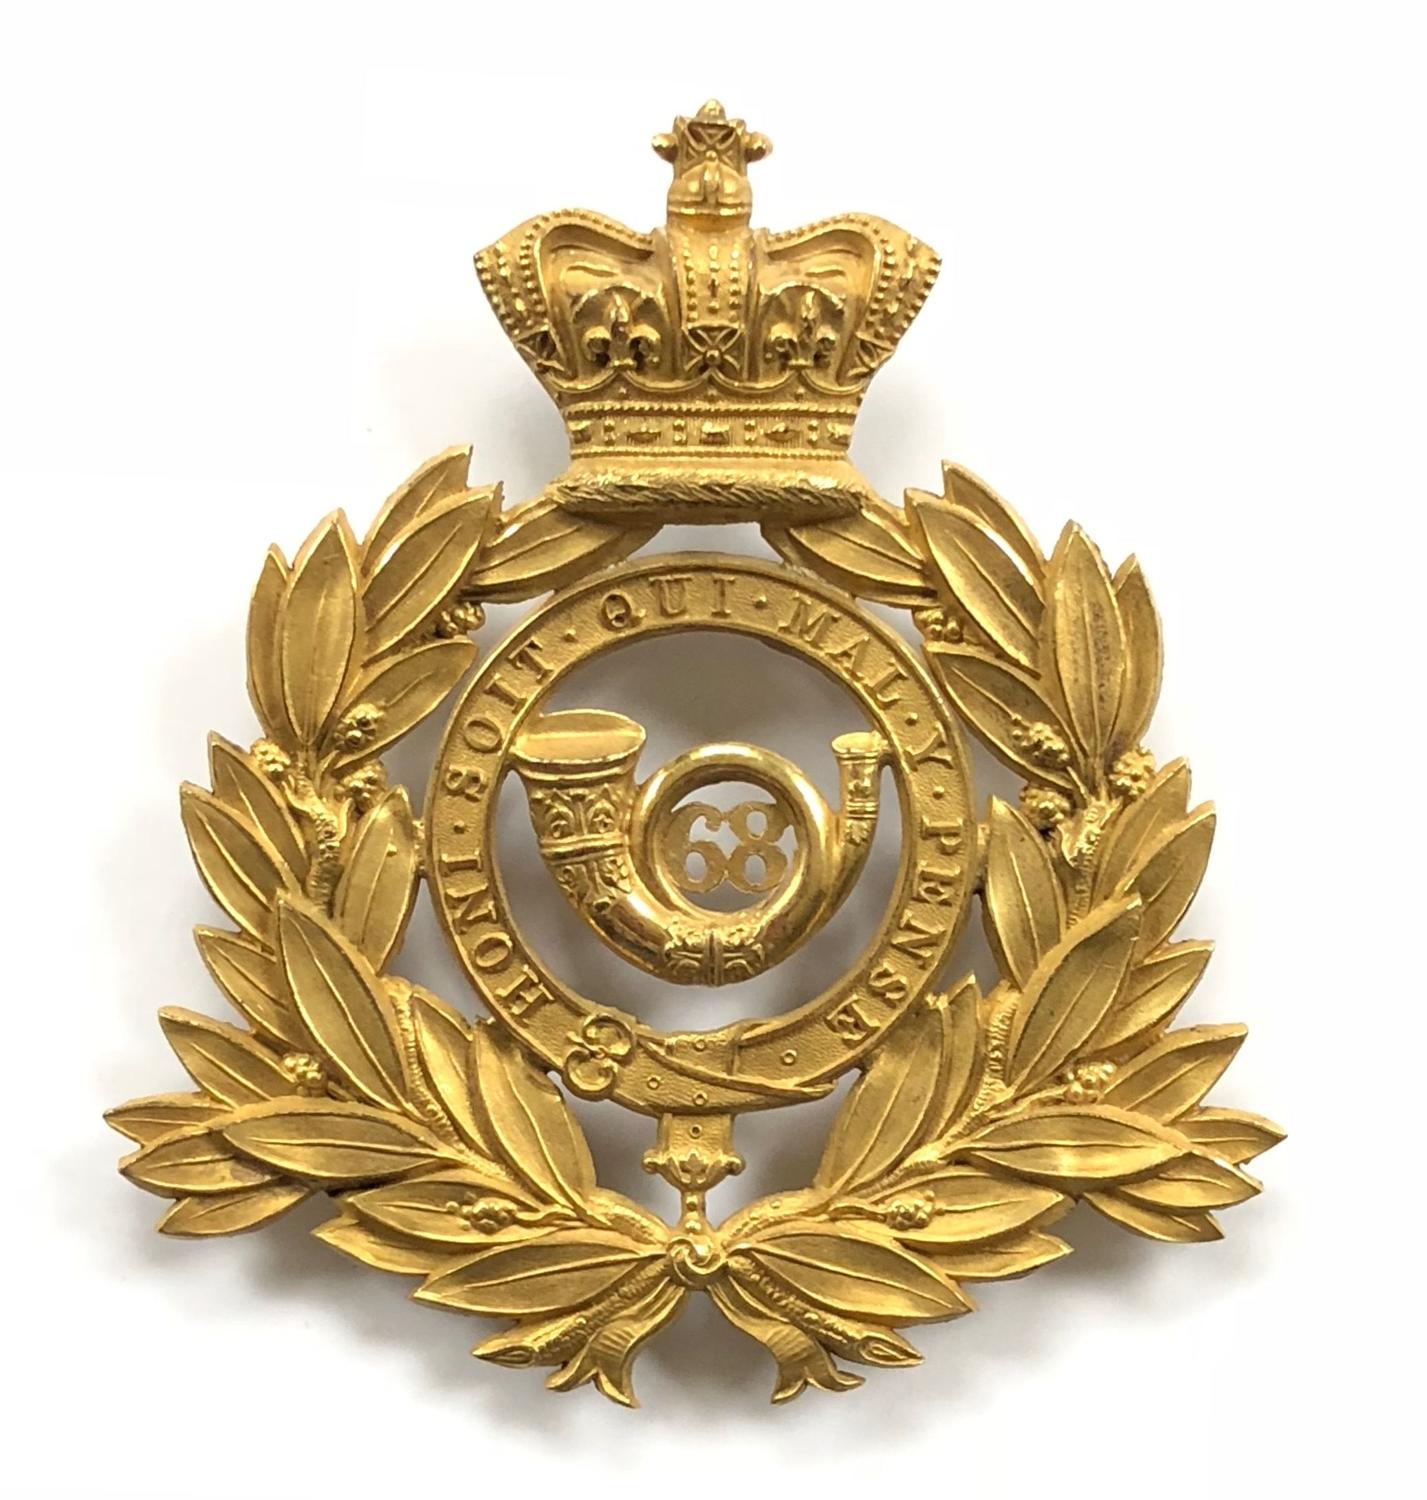 68th (Durham Light Infantry) Regiment Victorian Officer’s shako plat